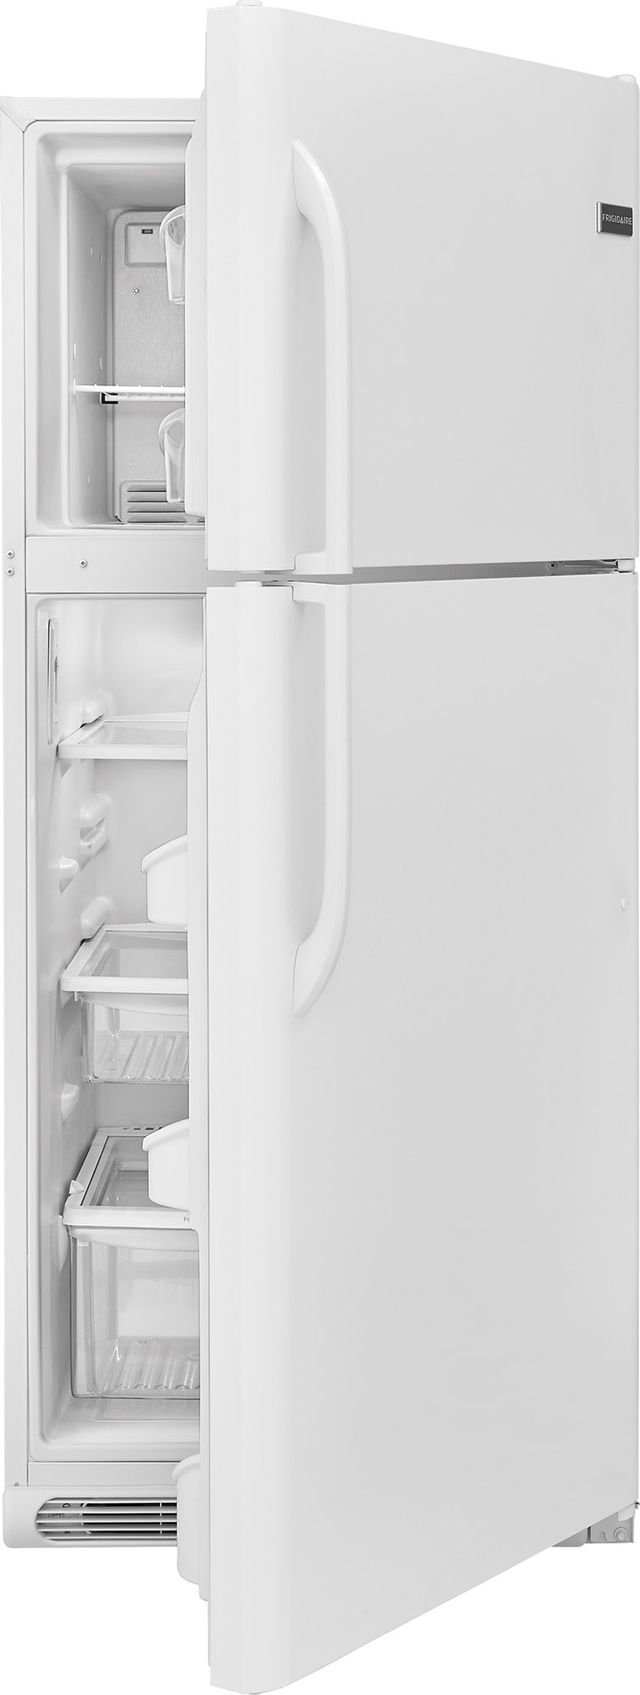 Frigidaire Gallery® 20.5 Cu. Ft. Top Mount Refrigerator-Stainless Steel 12